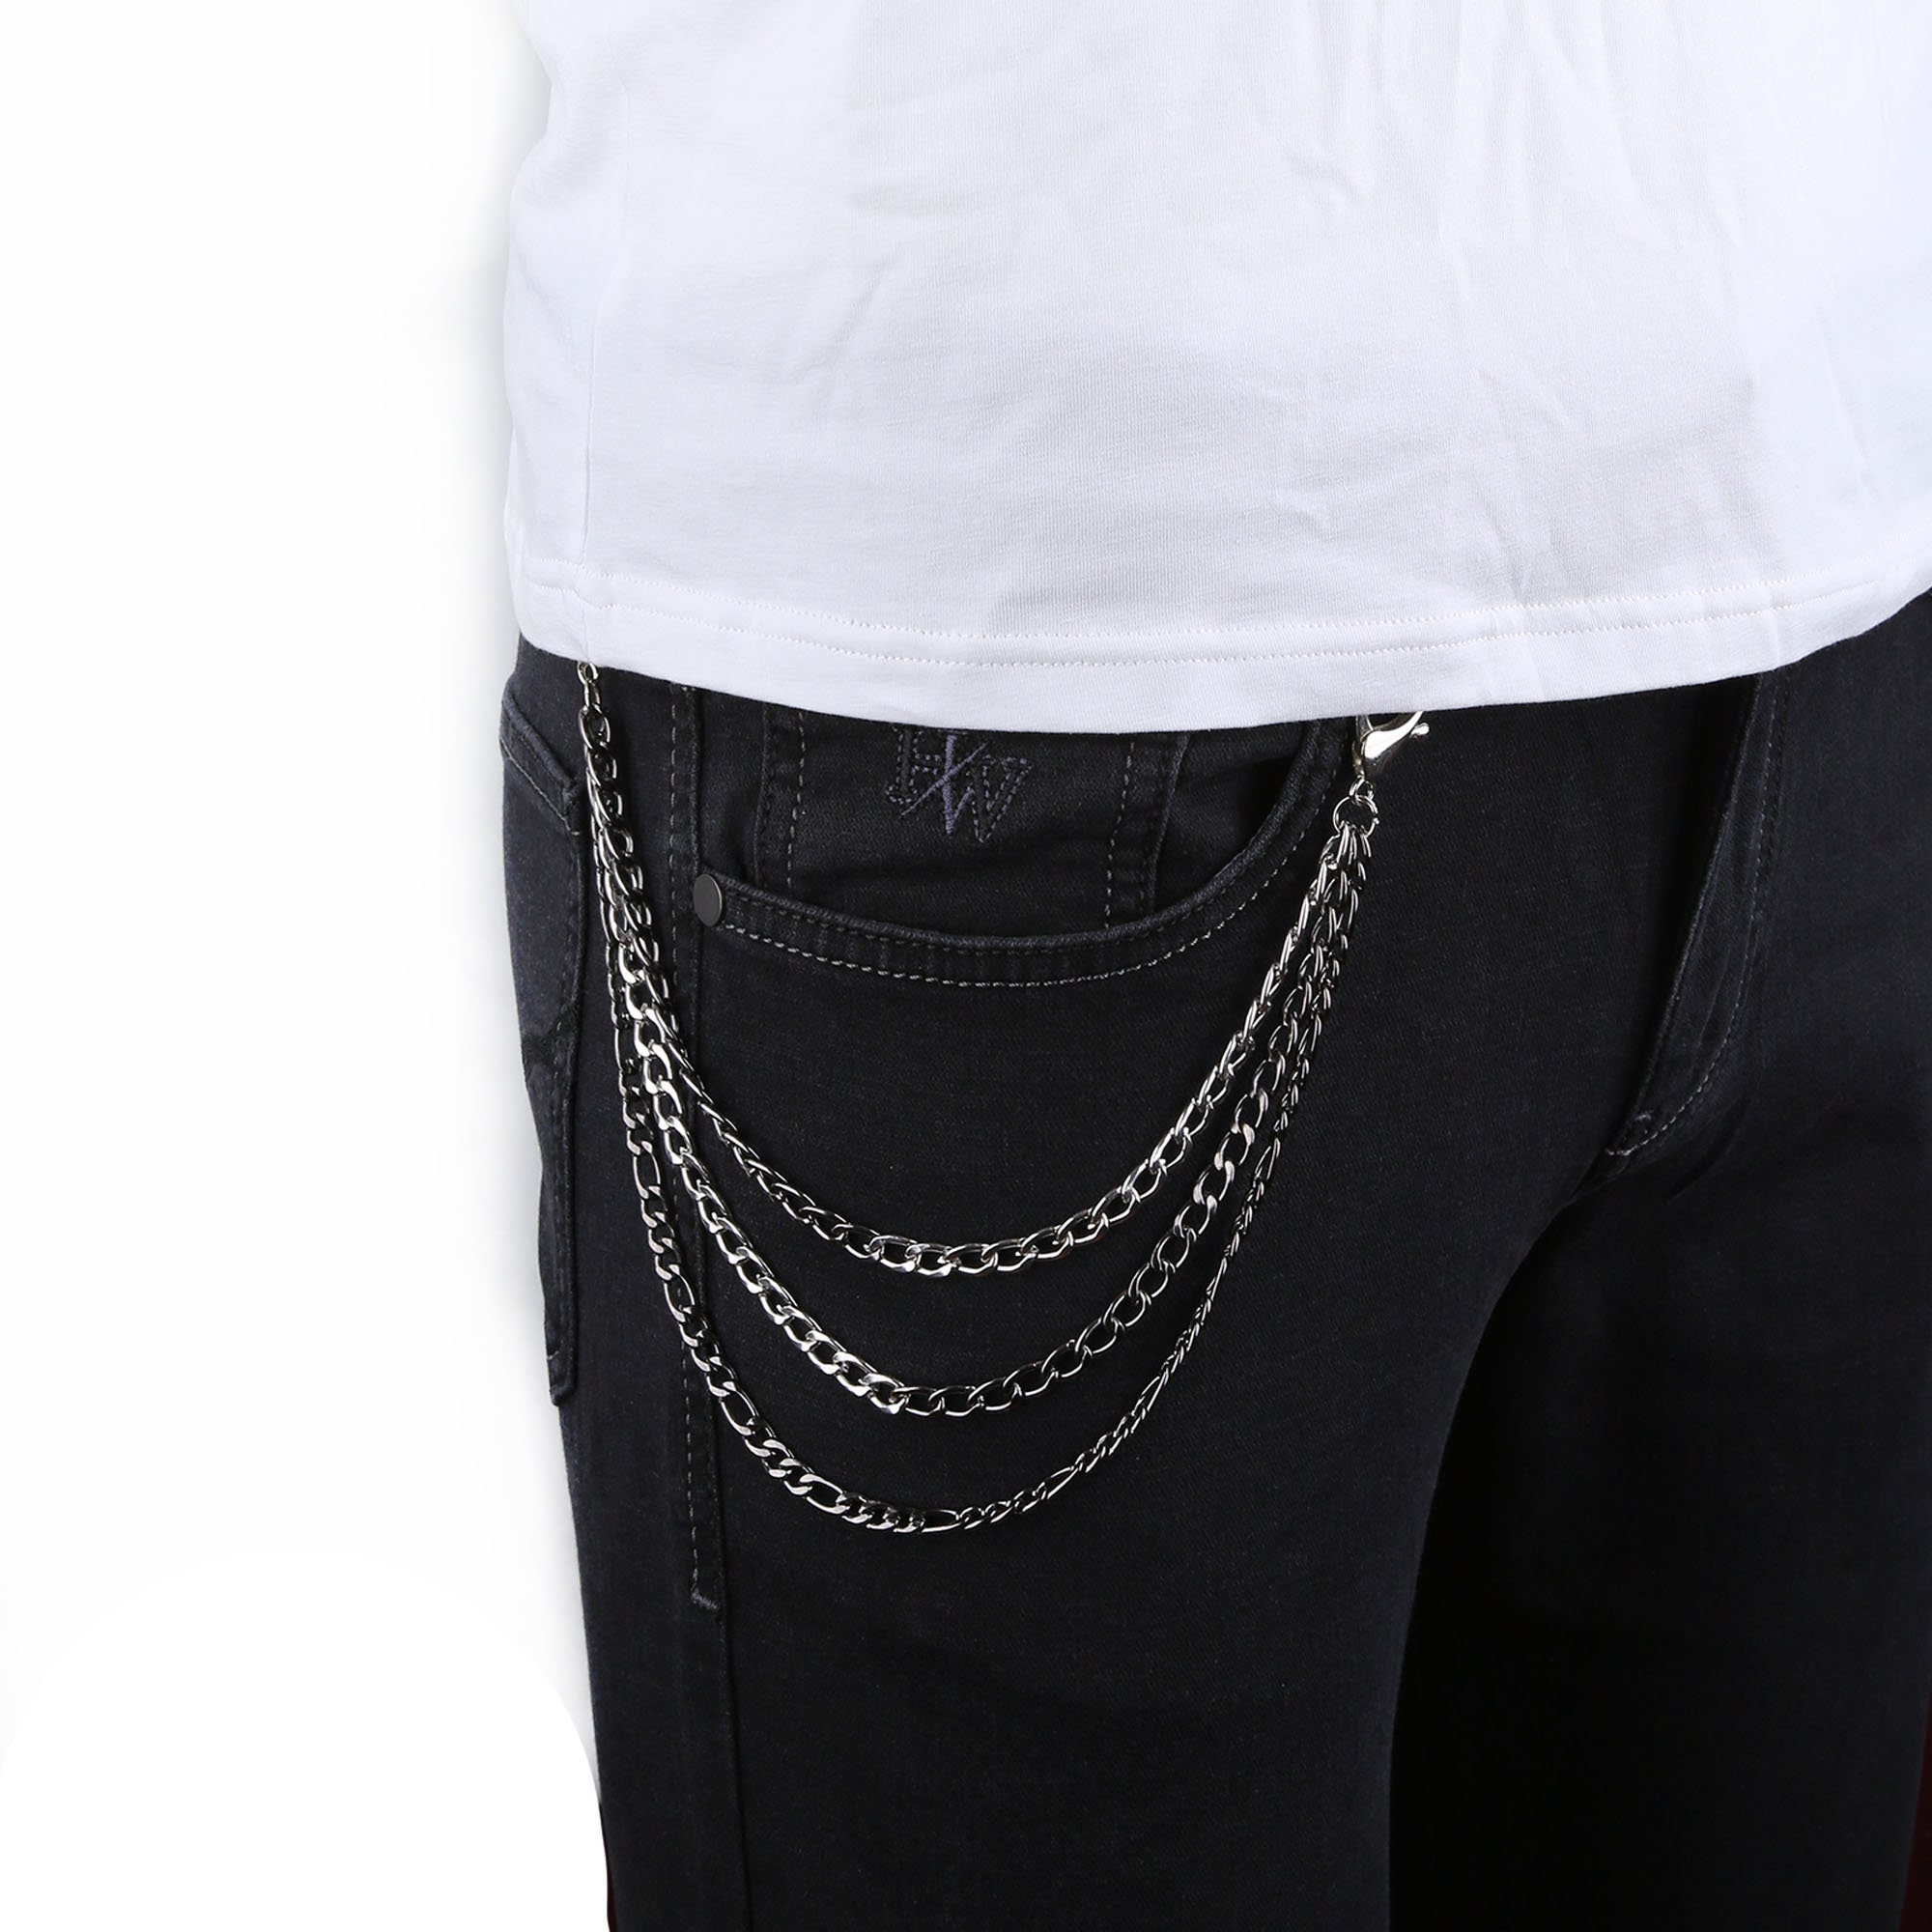 GENEMA Kawaii Jeans Chains Wallet Pants Chain Colorful Pocket